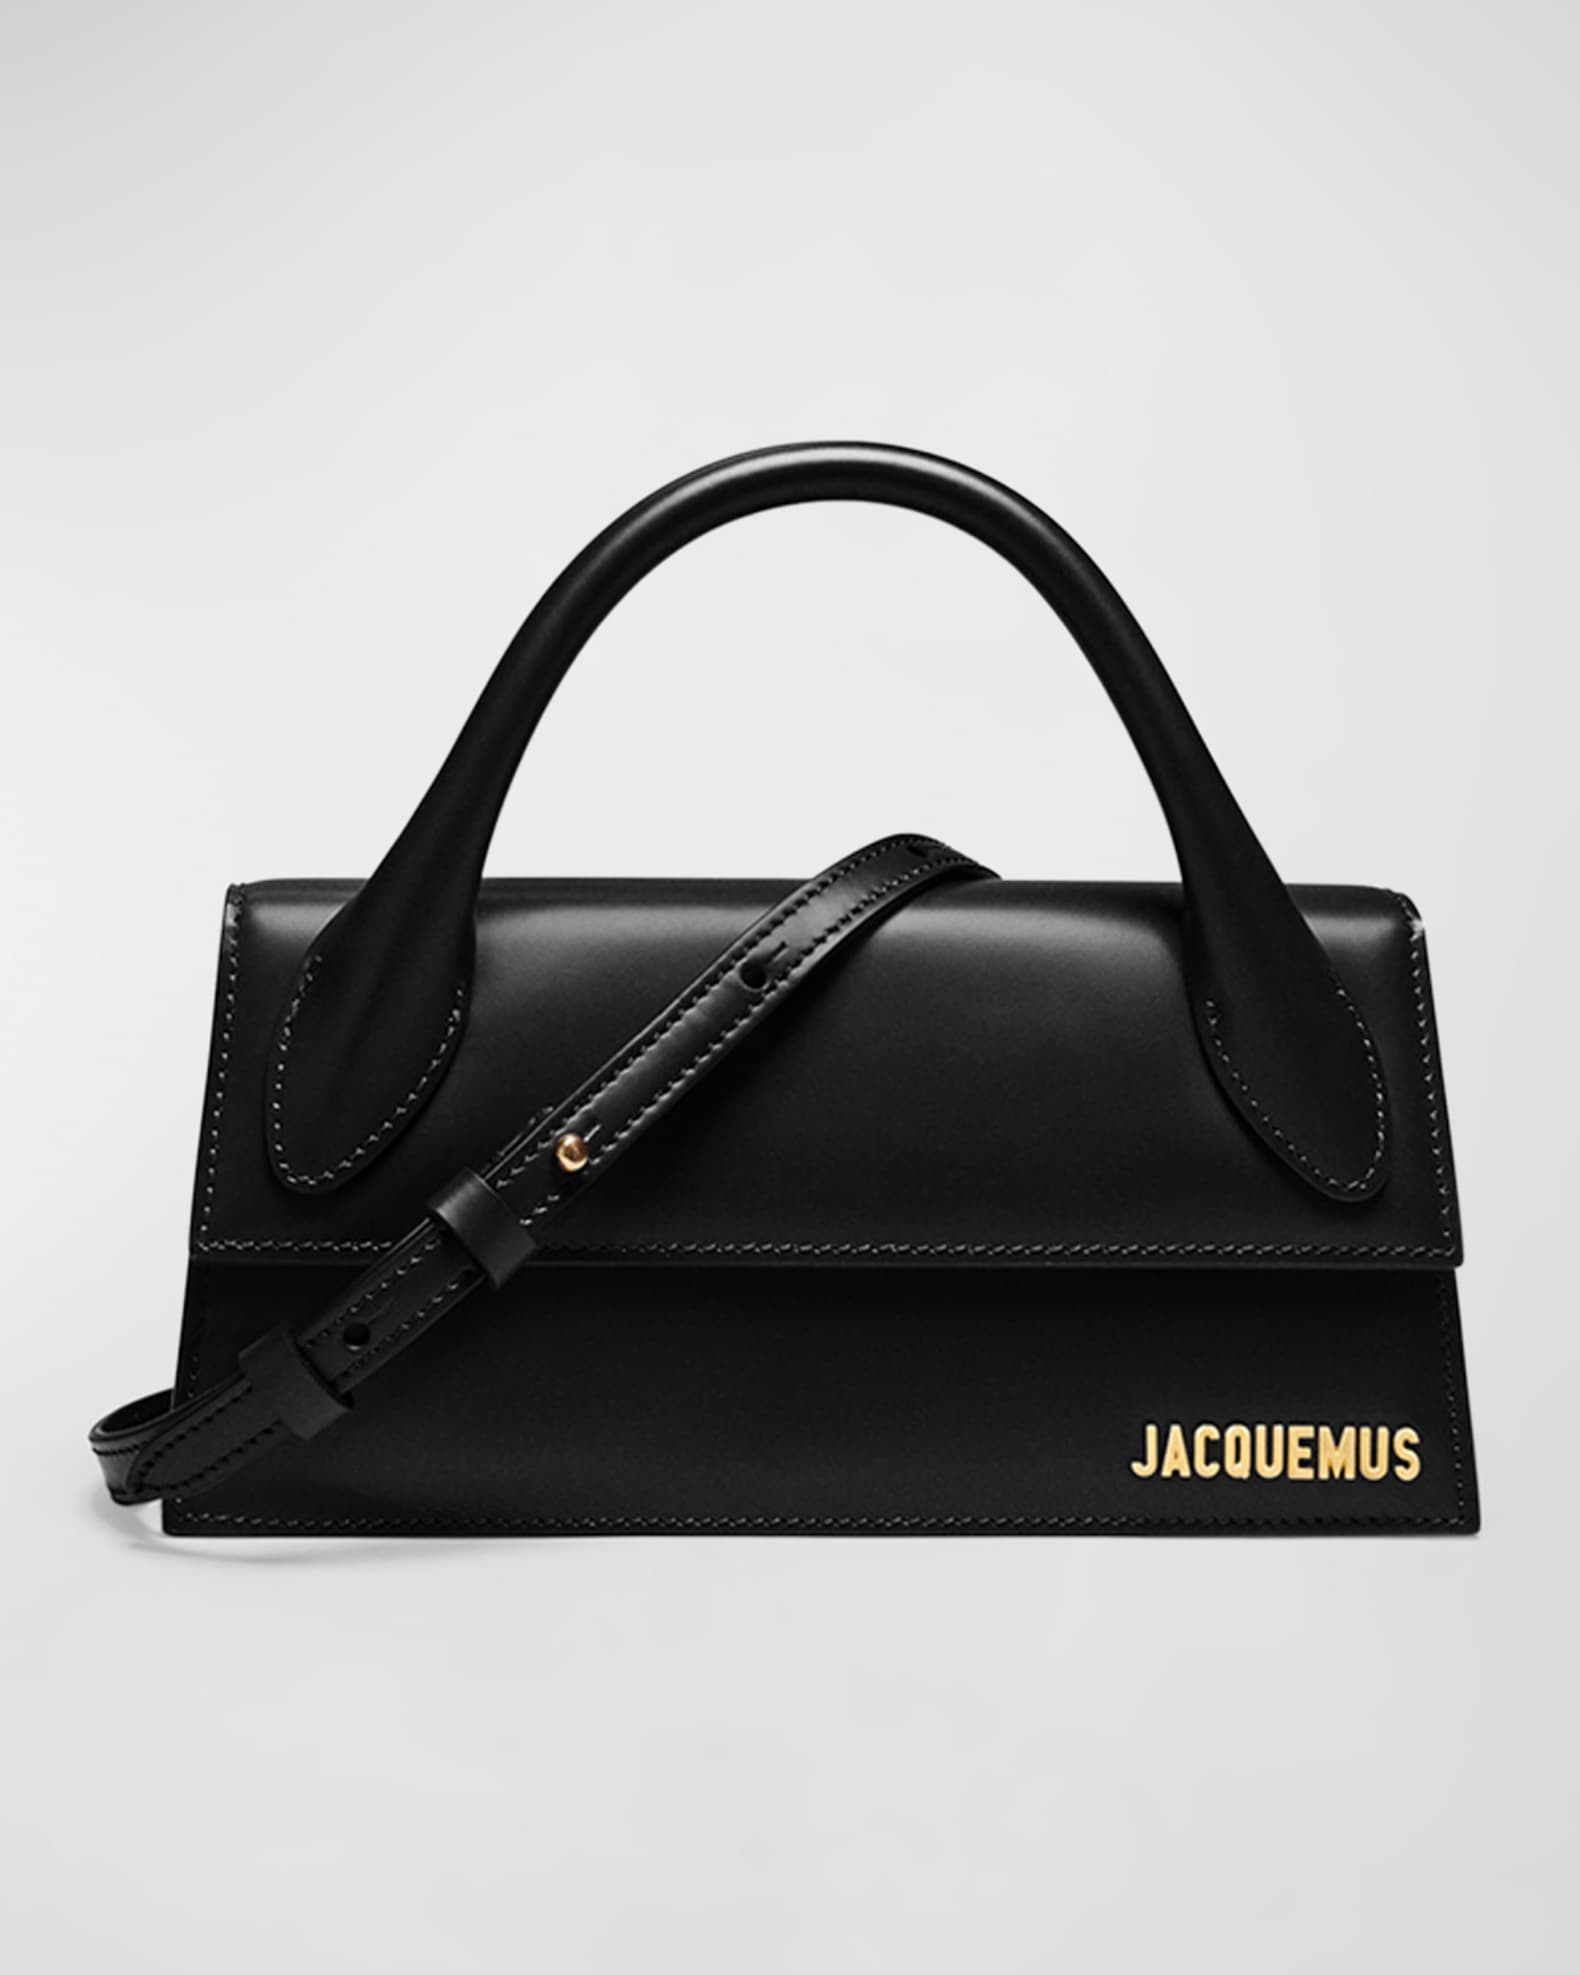 Jacquemus: Off-White 'Le Chiquito Long' Bag